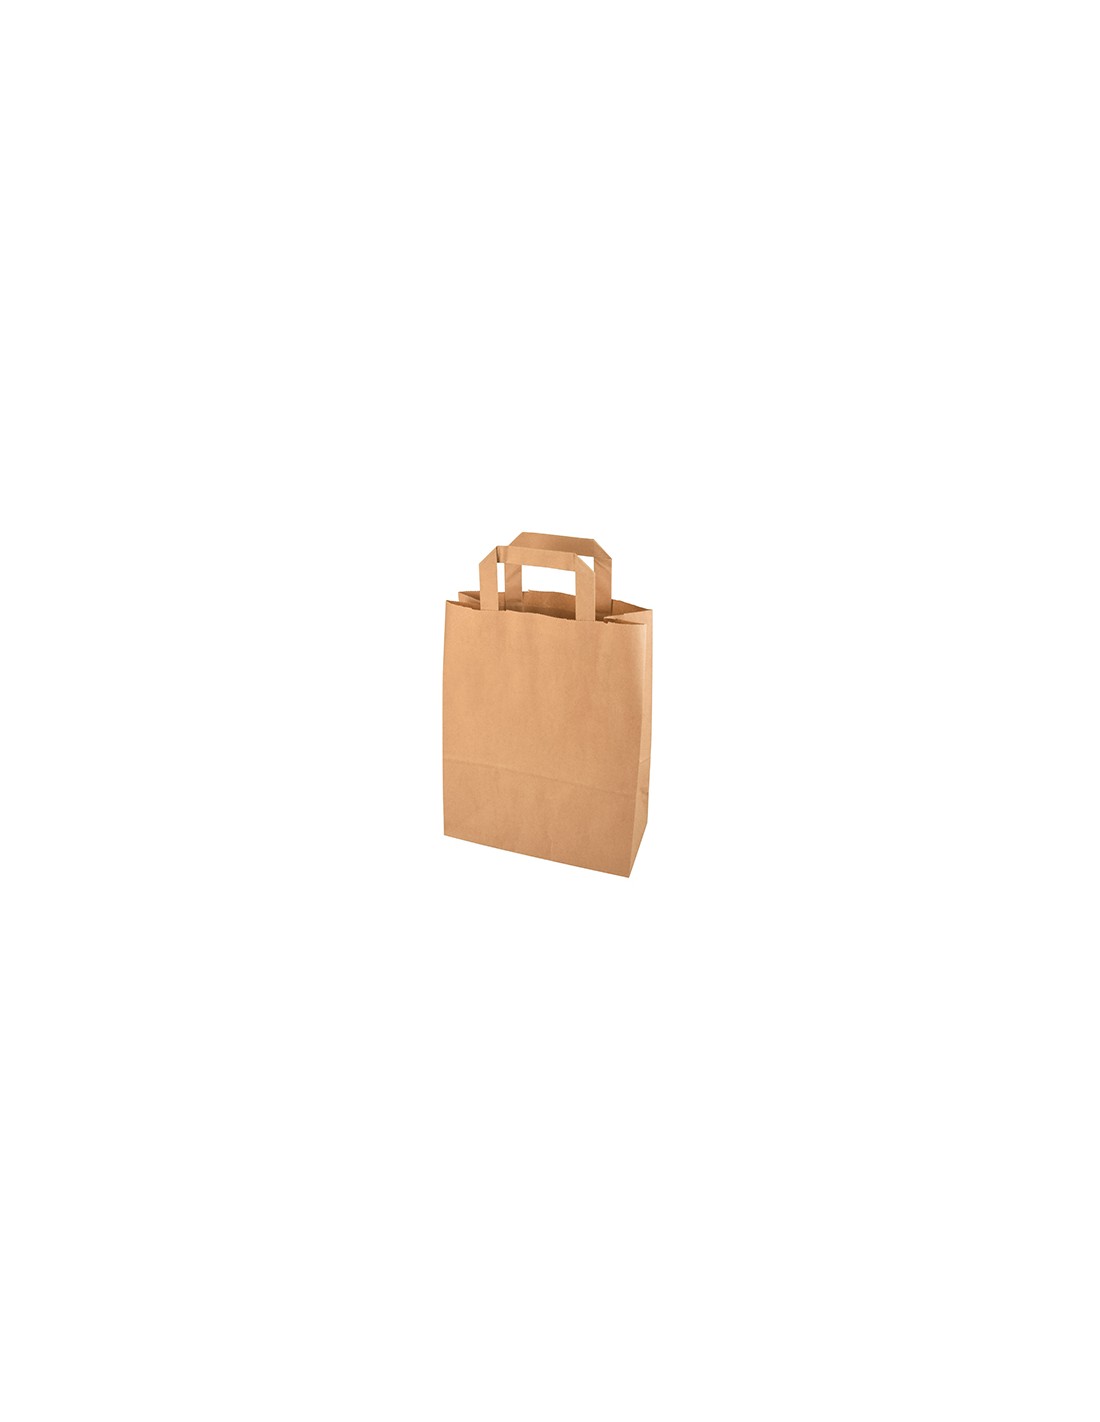 Bolsa de papel Kraft, 50 unidades, hecha de papel kraft 100% reciclable y  biodegradable, bolsas de papel marrón (10#)